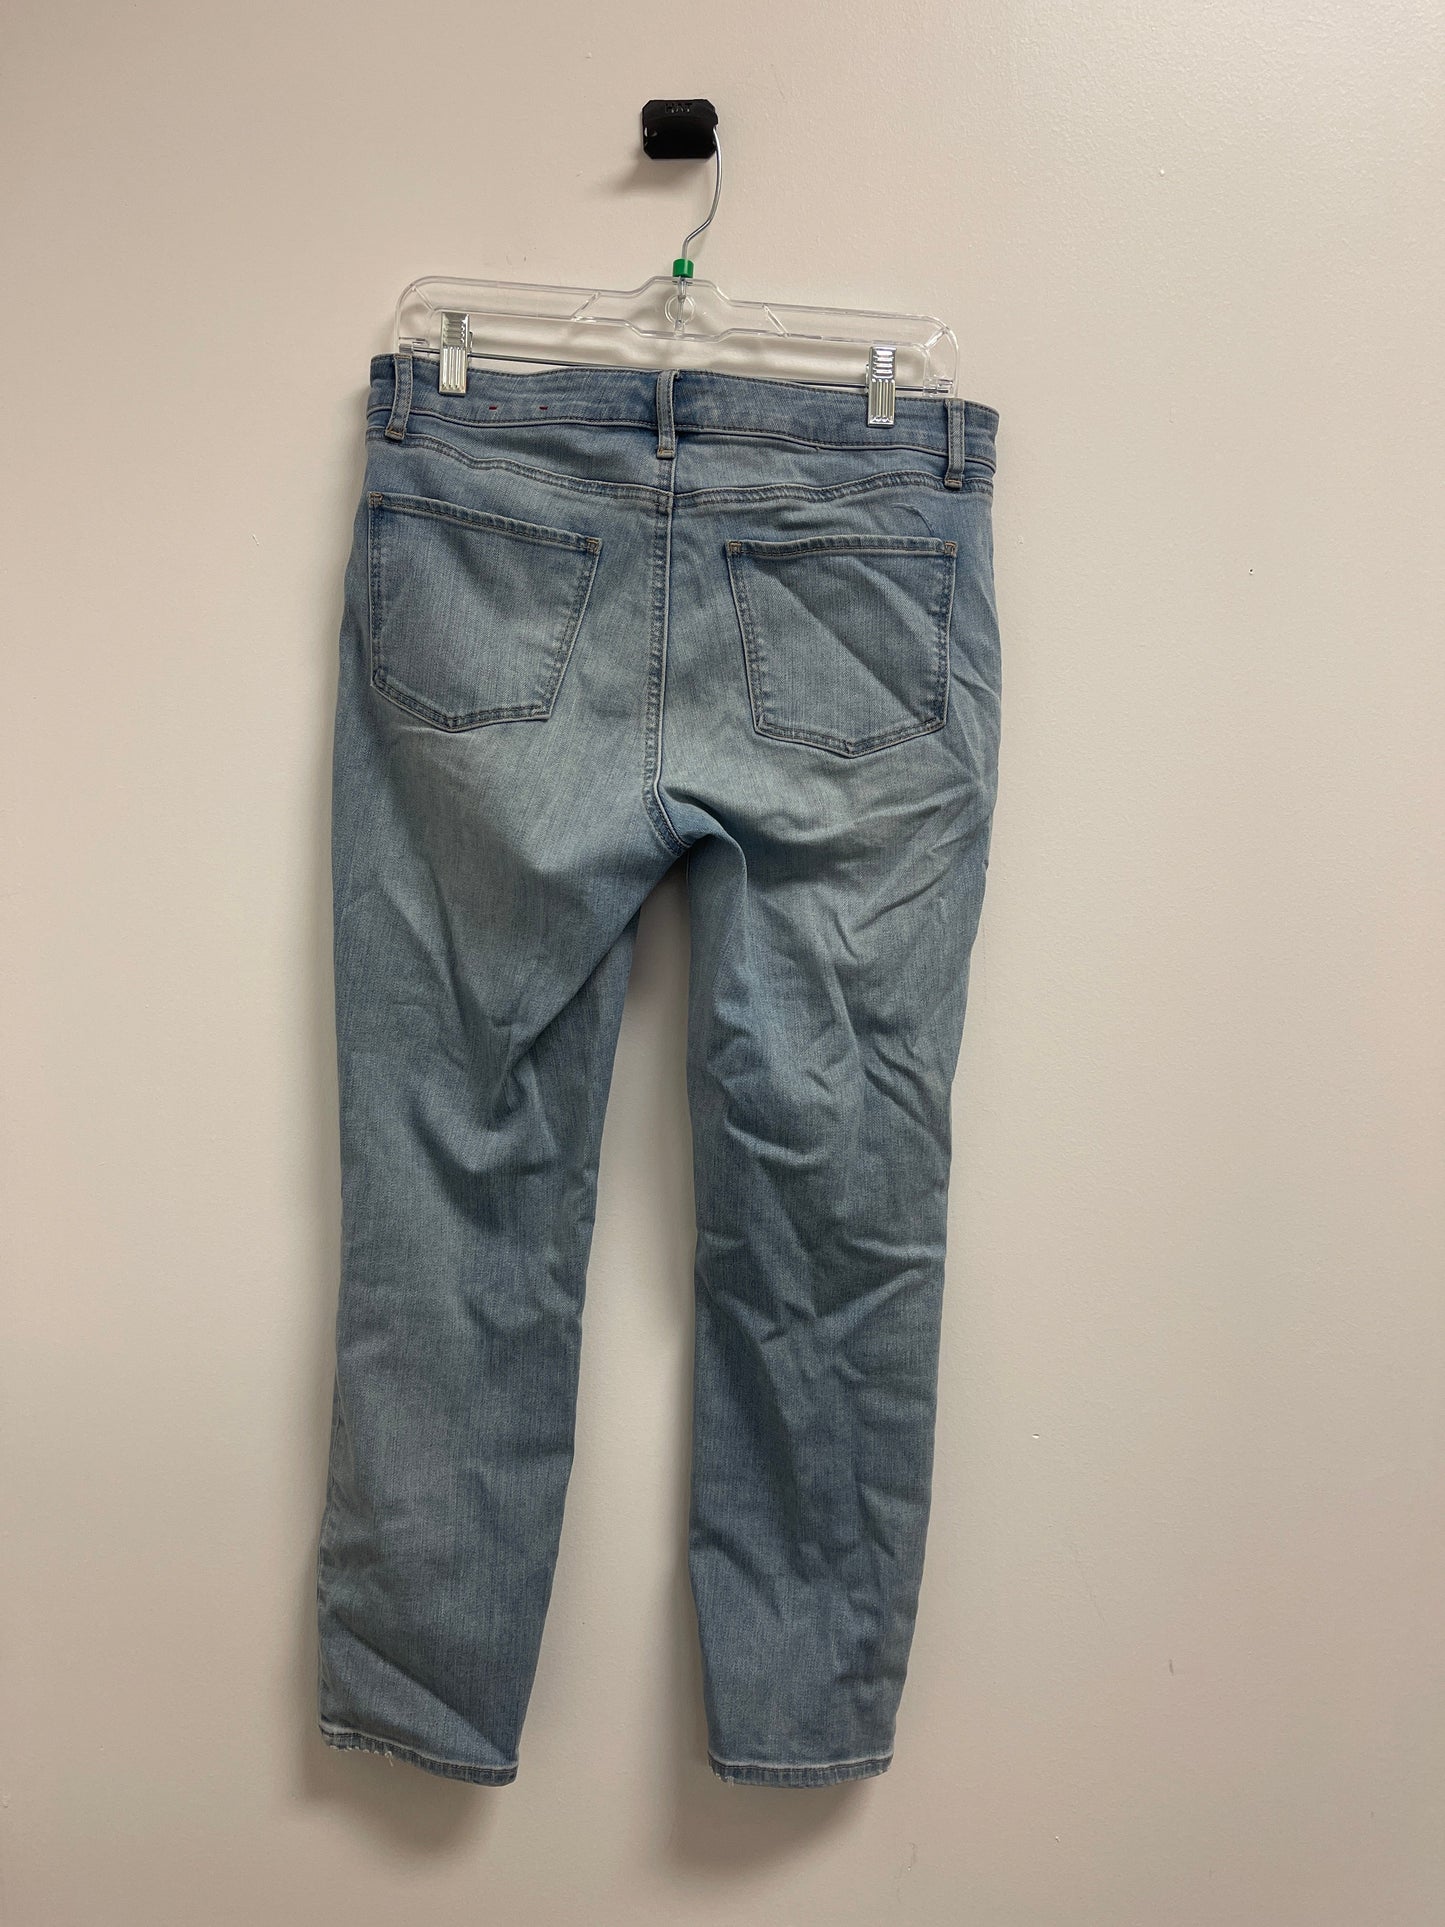 Jeans Skinny By Talbots  Size: 8